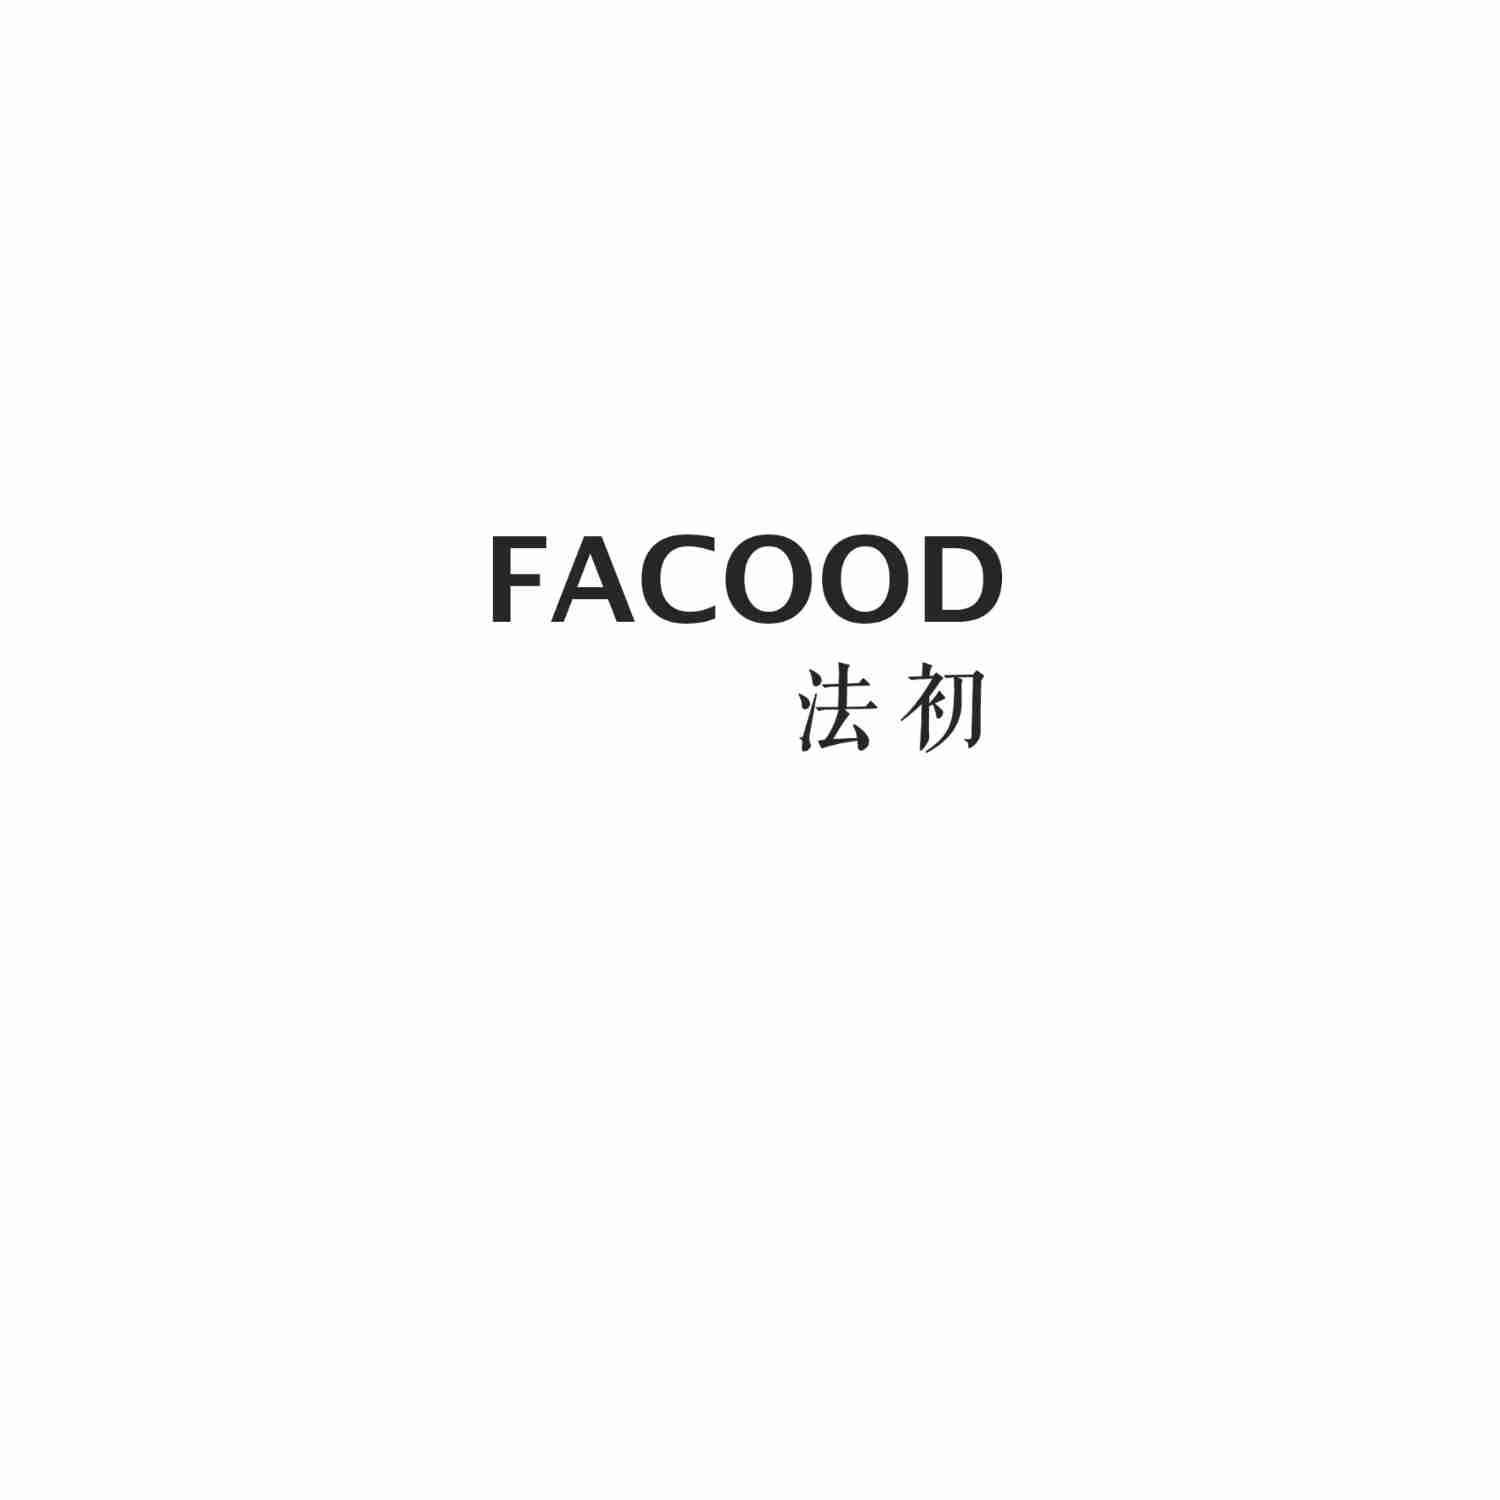 FACOOD 法初